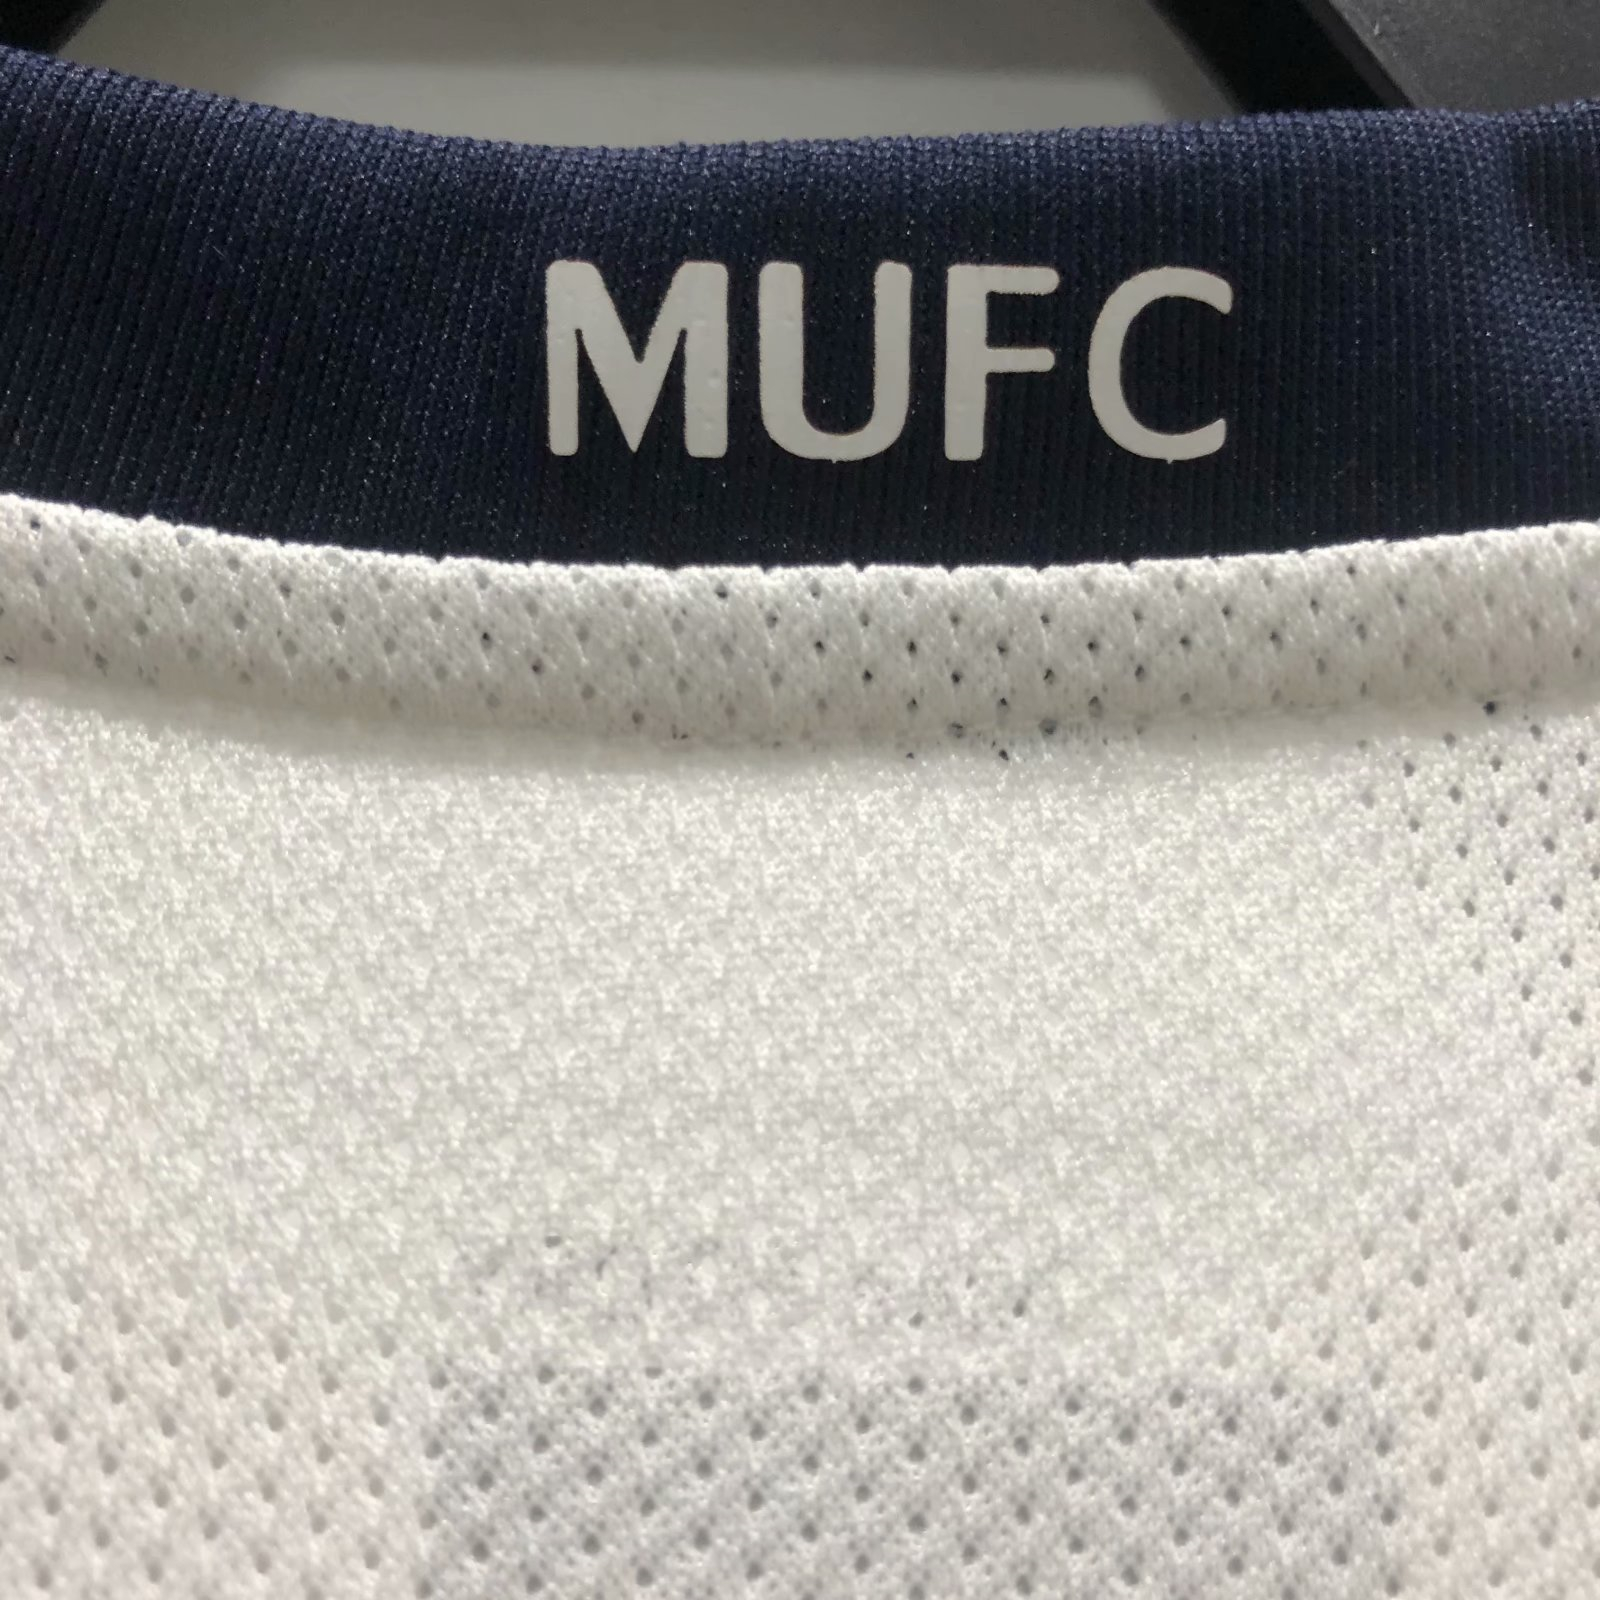 2008-2009 Manchester United Retro Championes League Version Away Man Soccer Football Kit